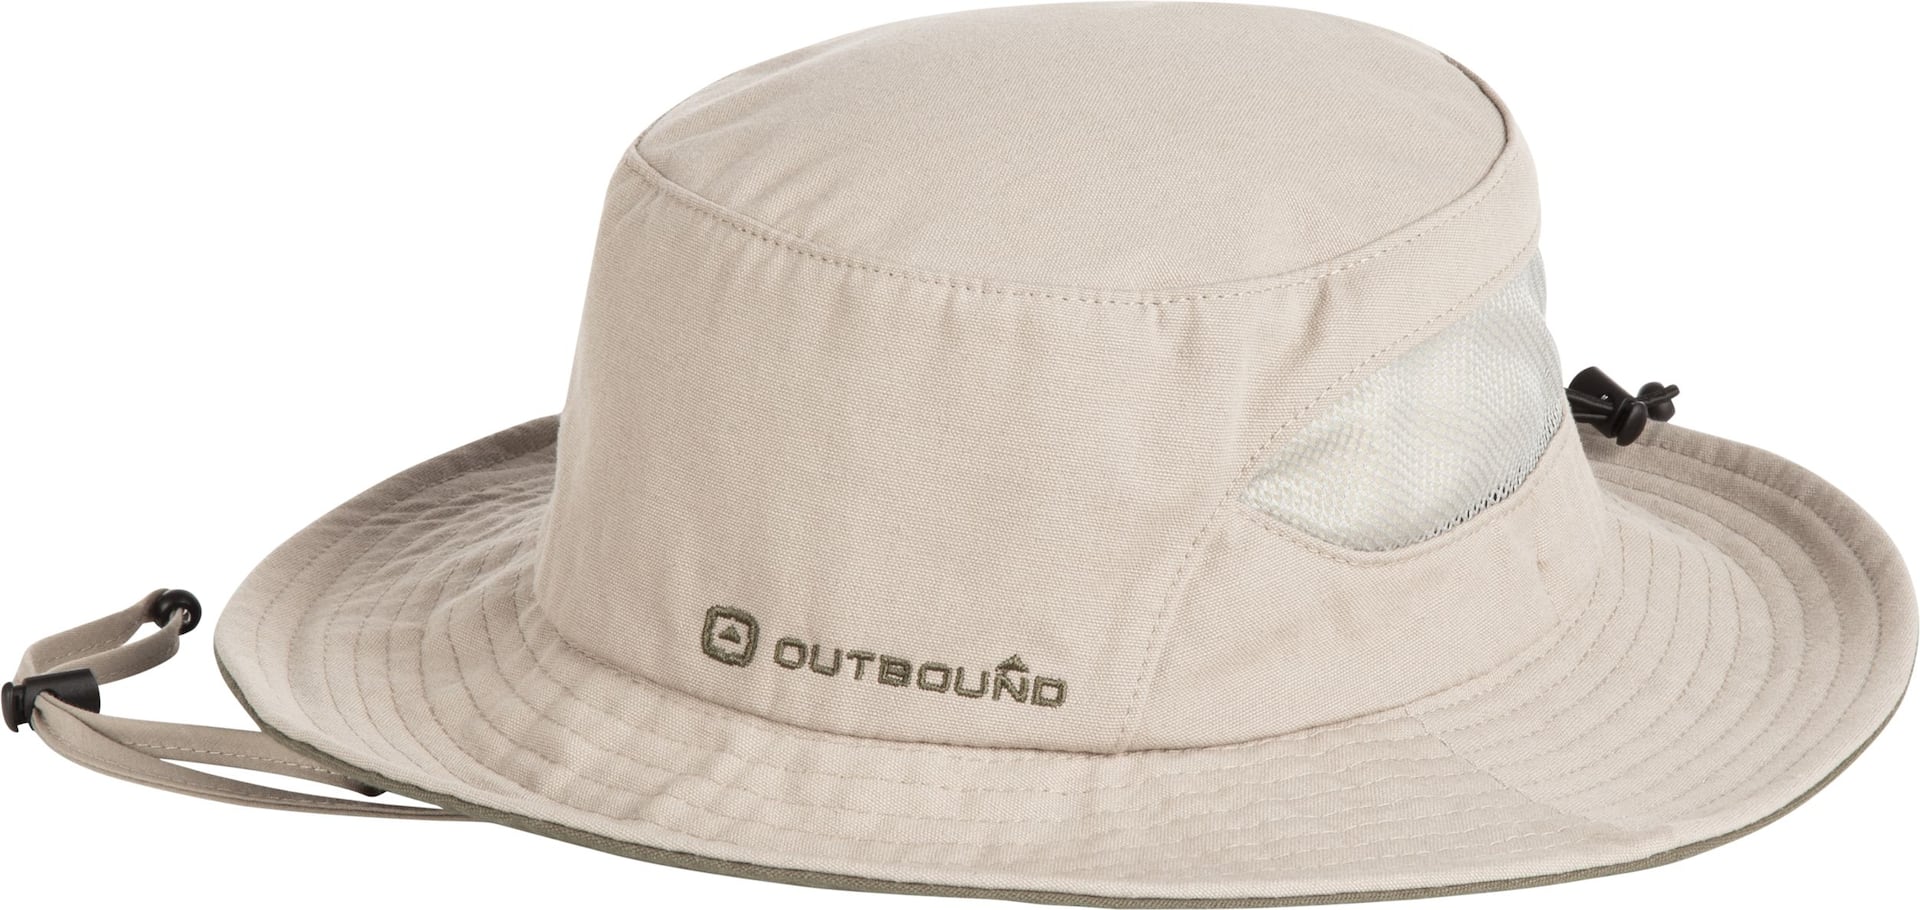 Outbound Women's Reversible Bucket Hat, Black/Polka Dots